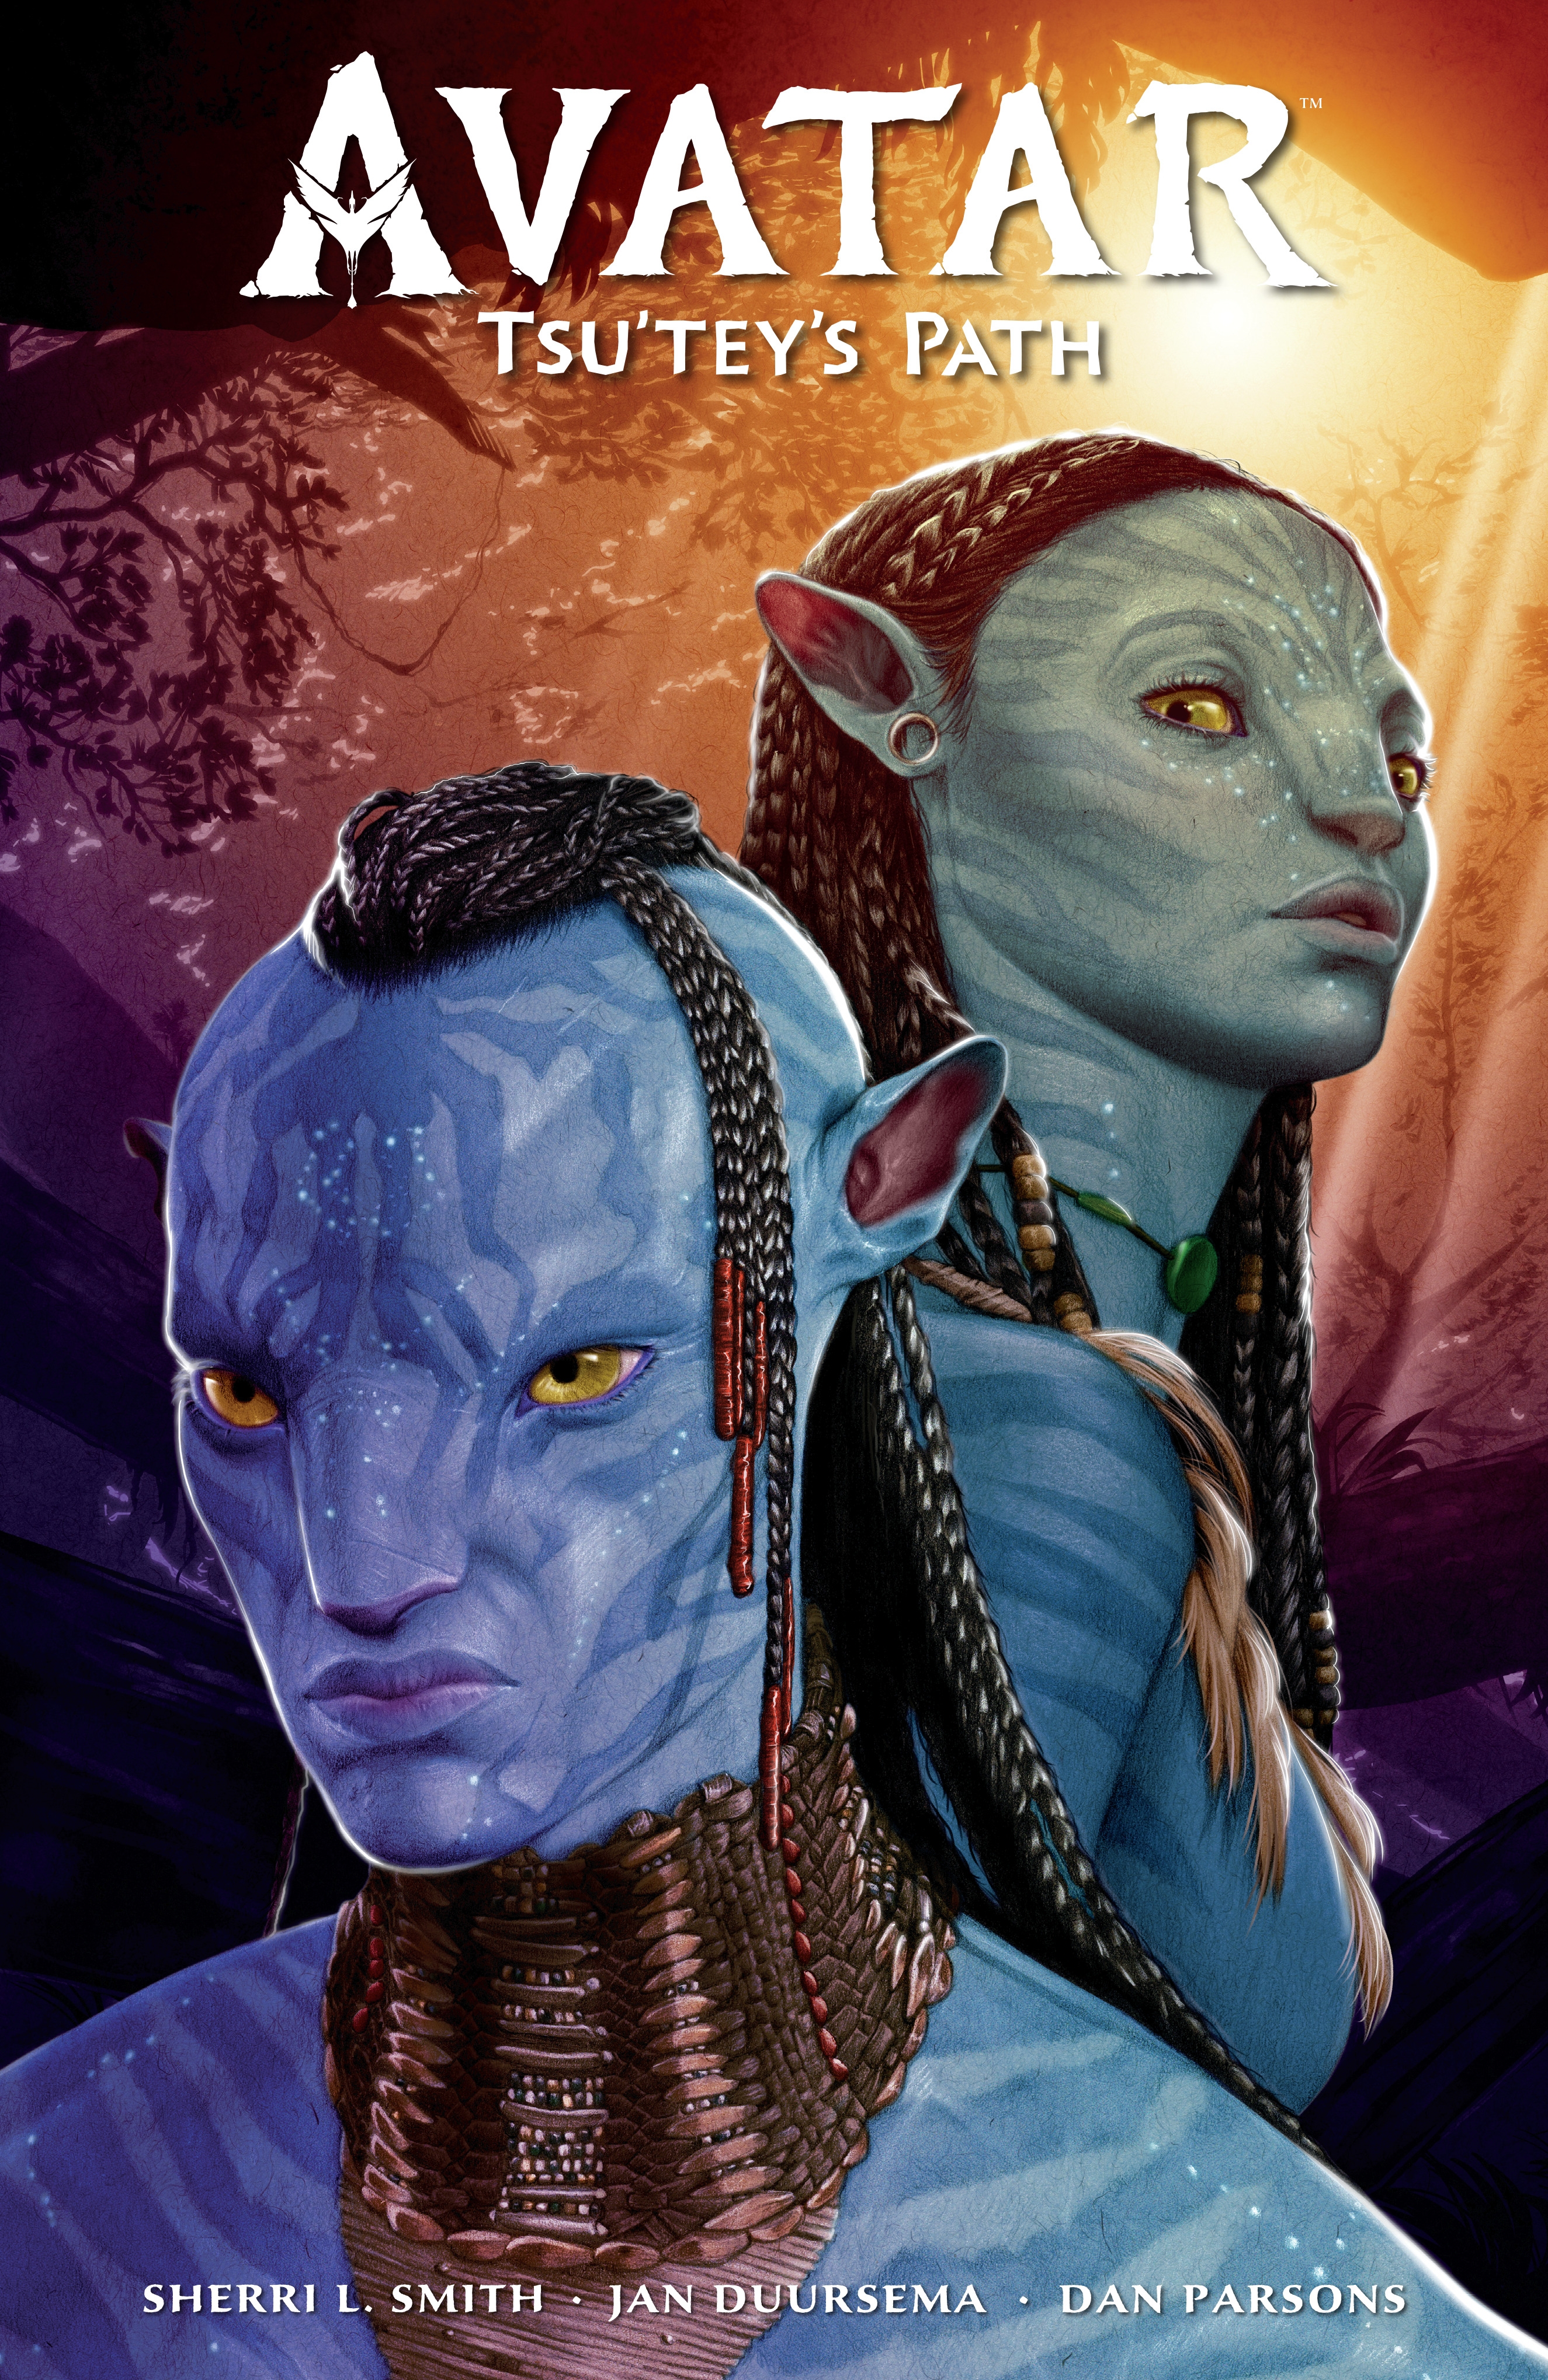 Avatar 2 Release Date Australia